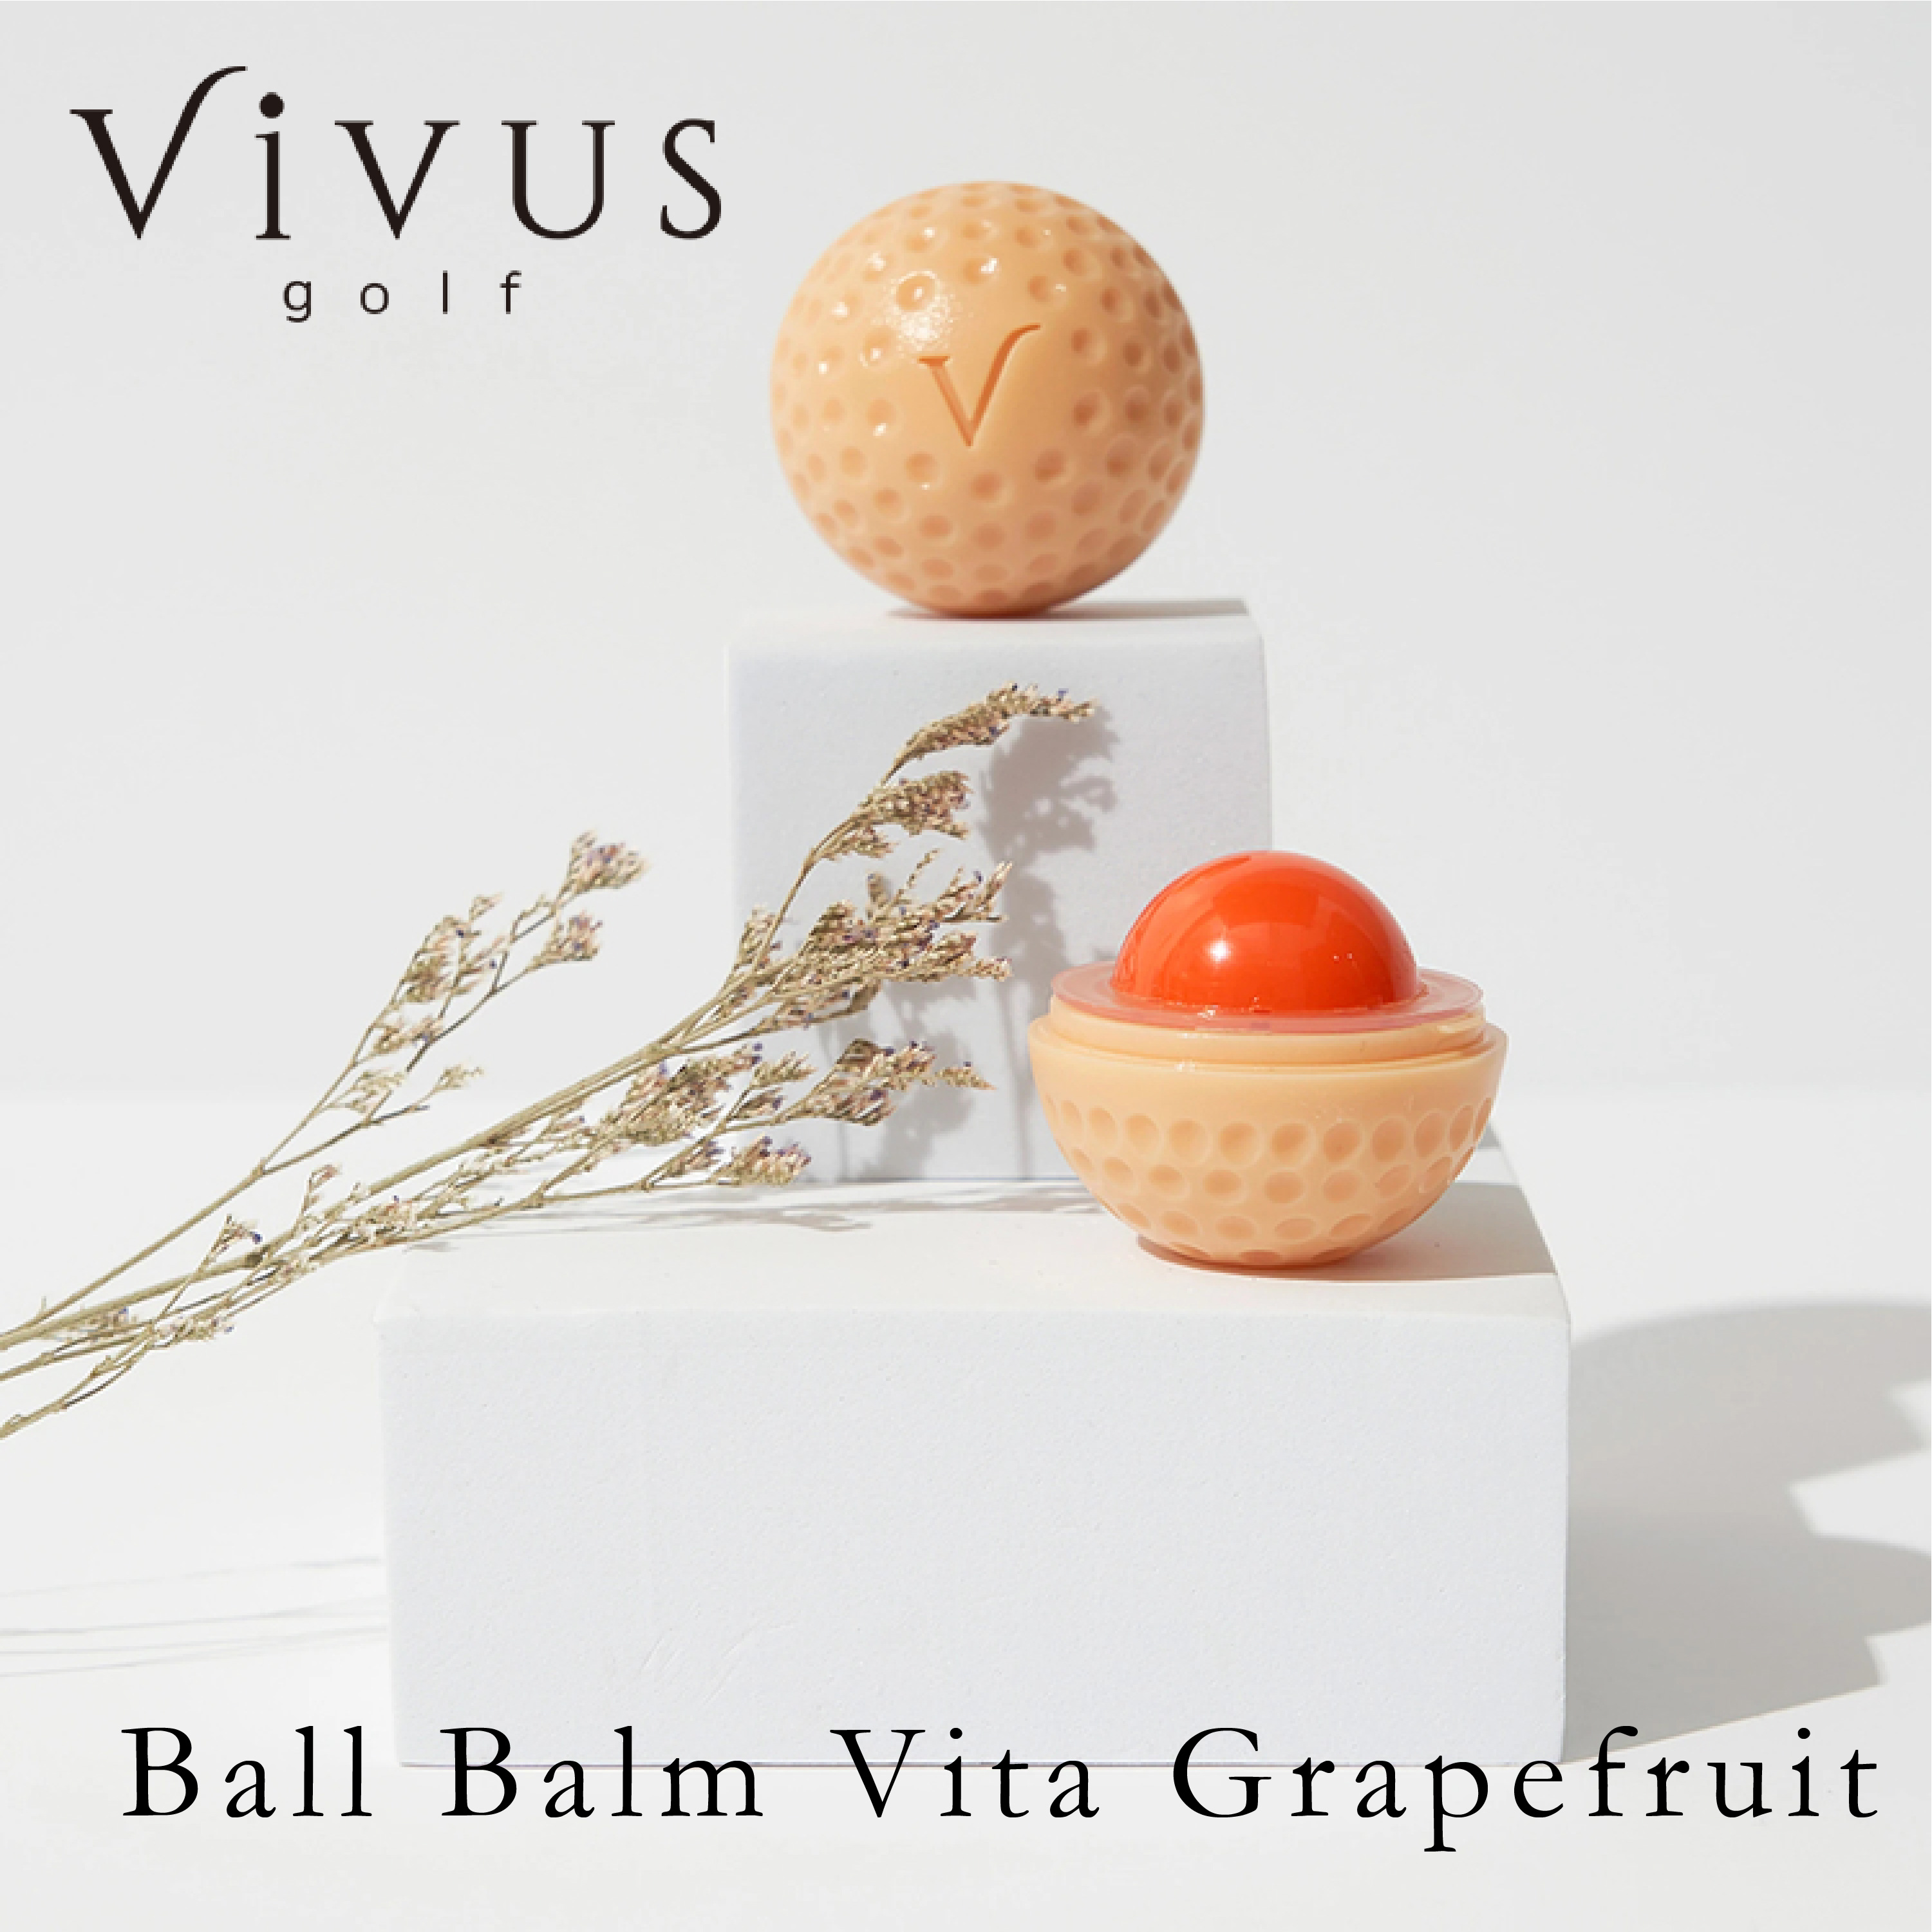 VIVUS golf Ball Balm Vita Grapefruit VI5MNJ02-028